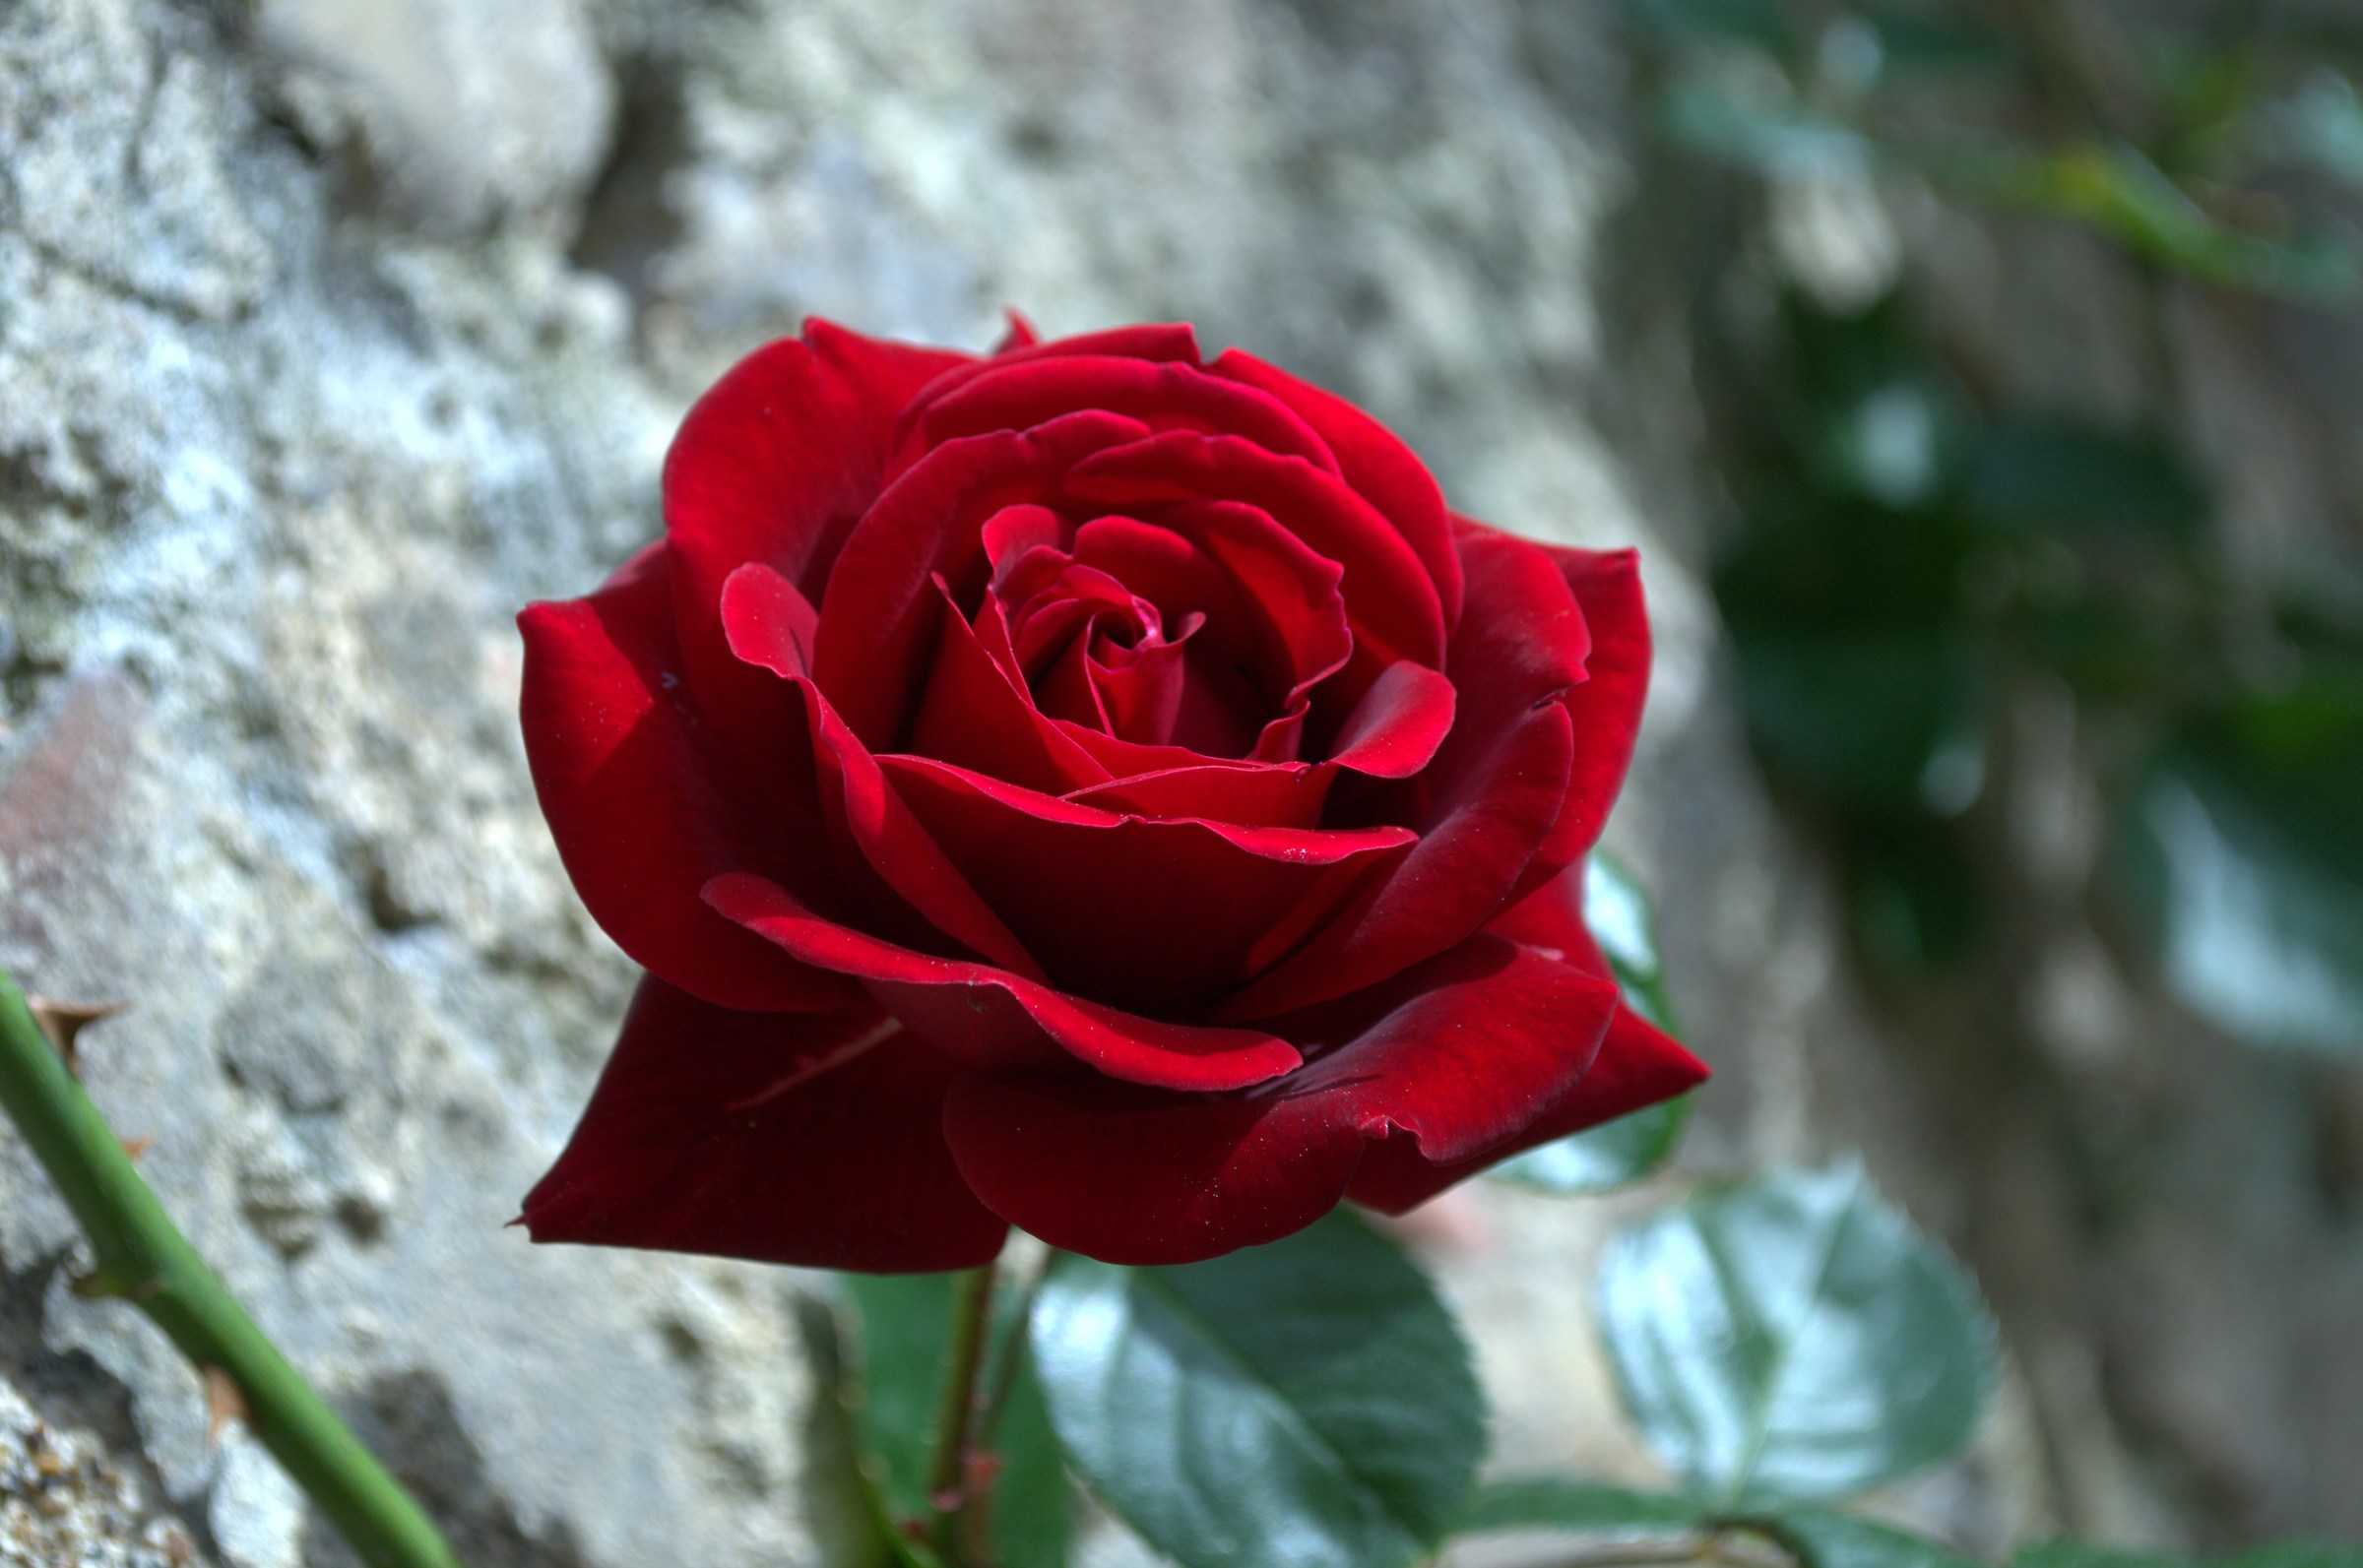 Una rosa rossa...